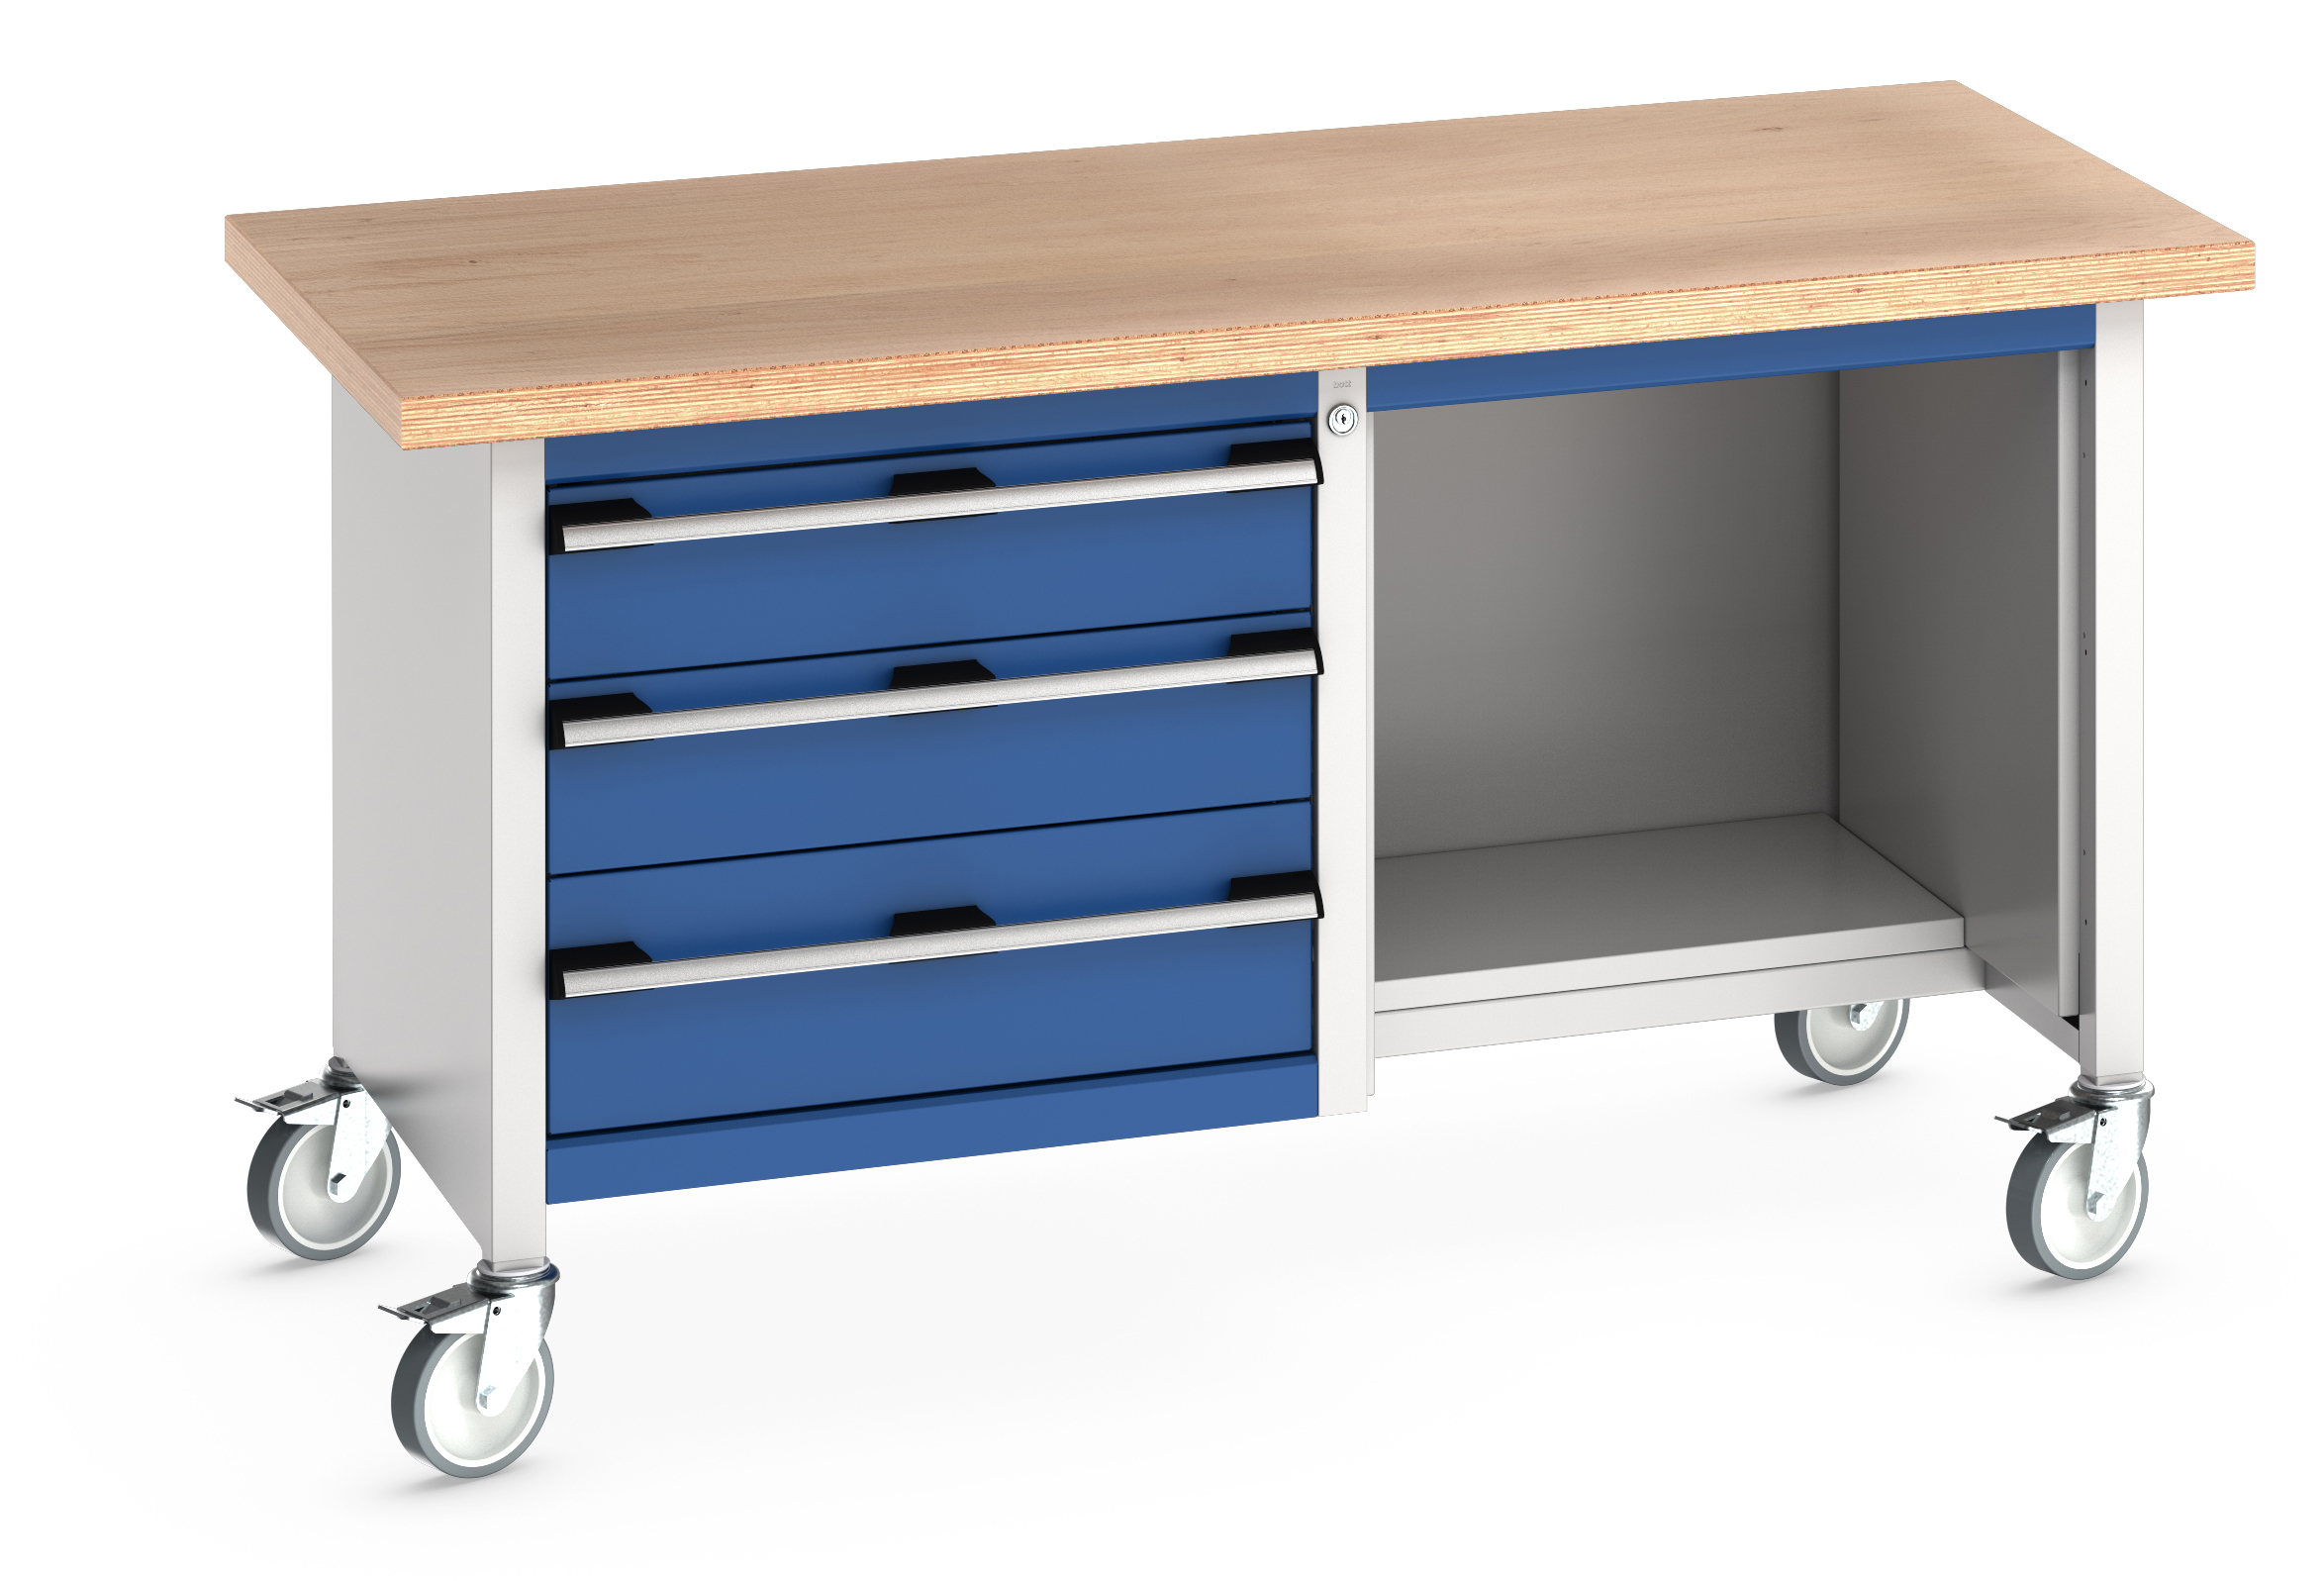 Bott Cubio Mobile Storage Bench With 3 Drawer Cabinet / Open With Half Depth Base Shelf - 41002115.11V